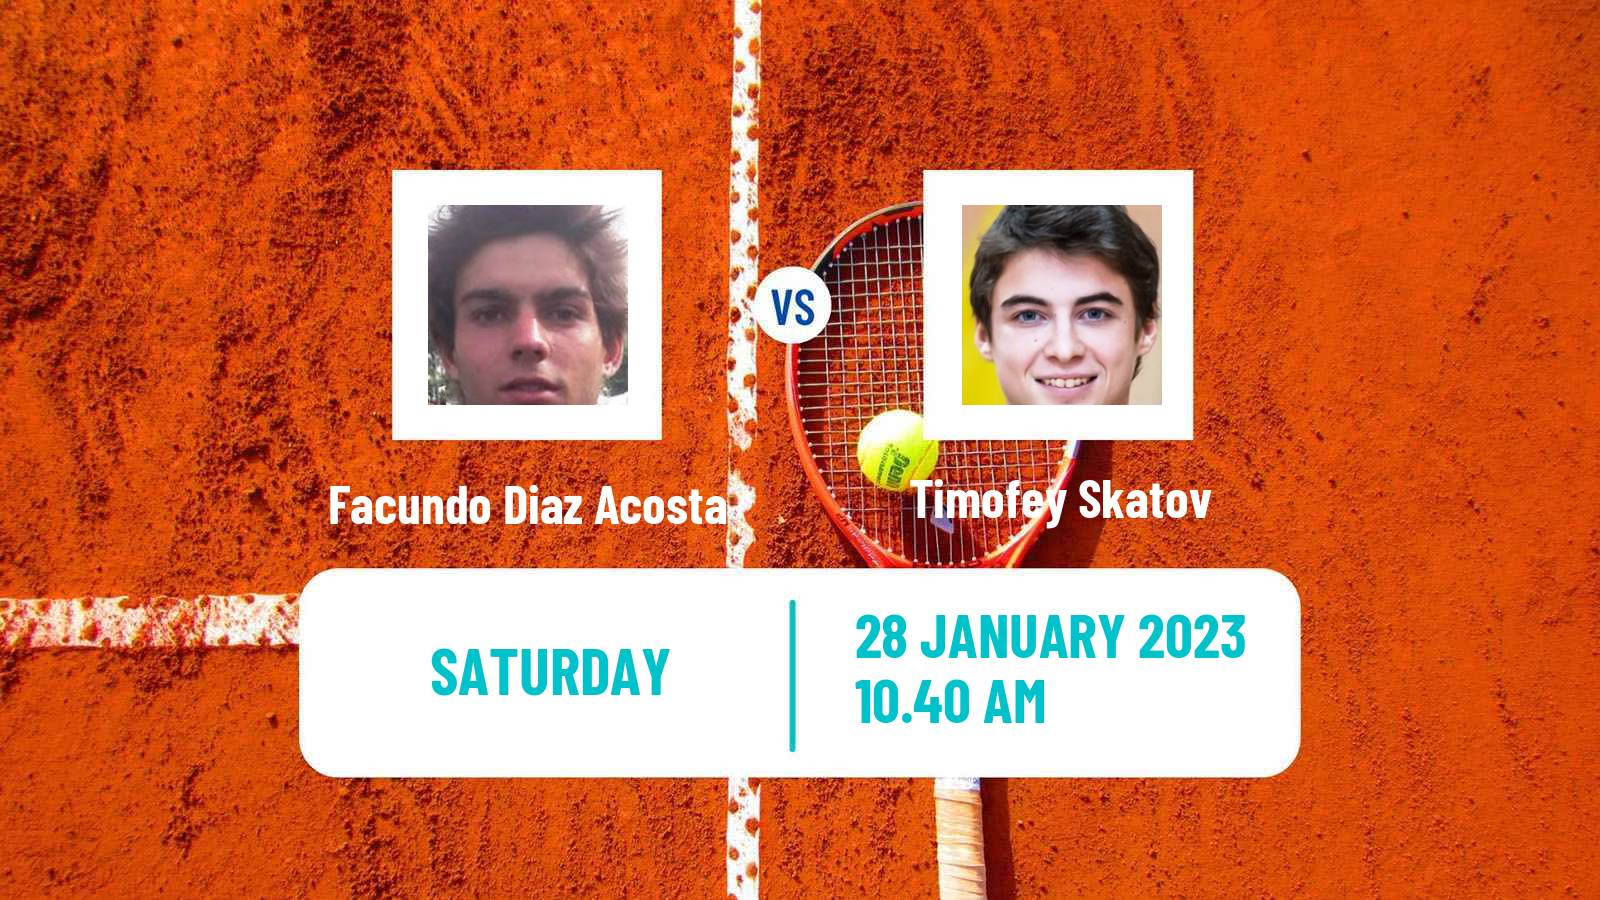 Tennis ATP Challenger Facundo Diaz Acosta - Timofey Skatov